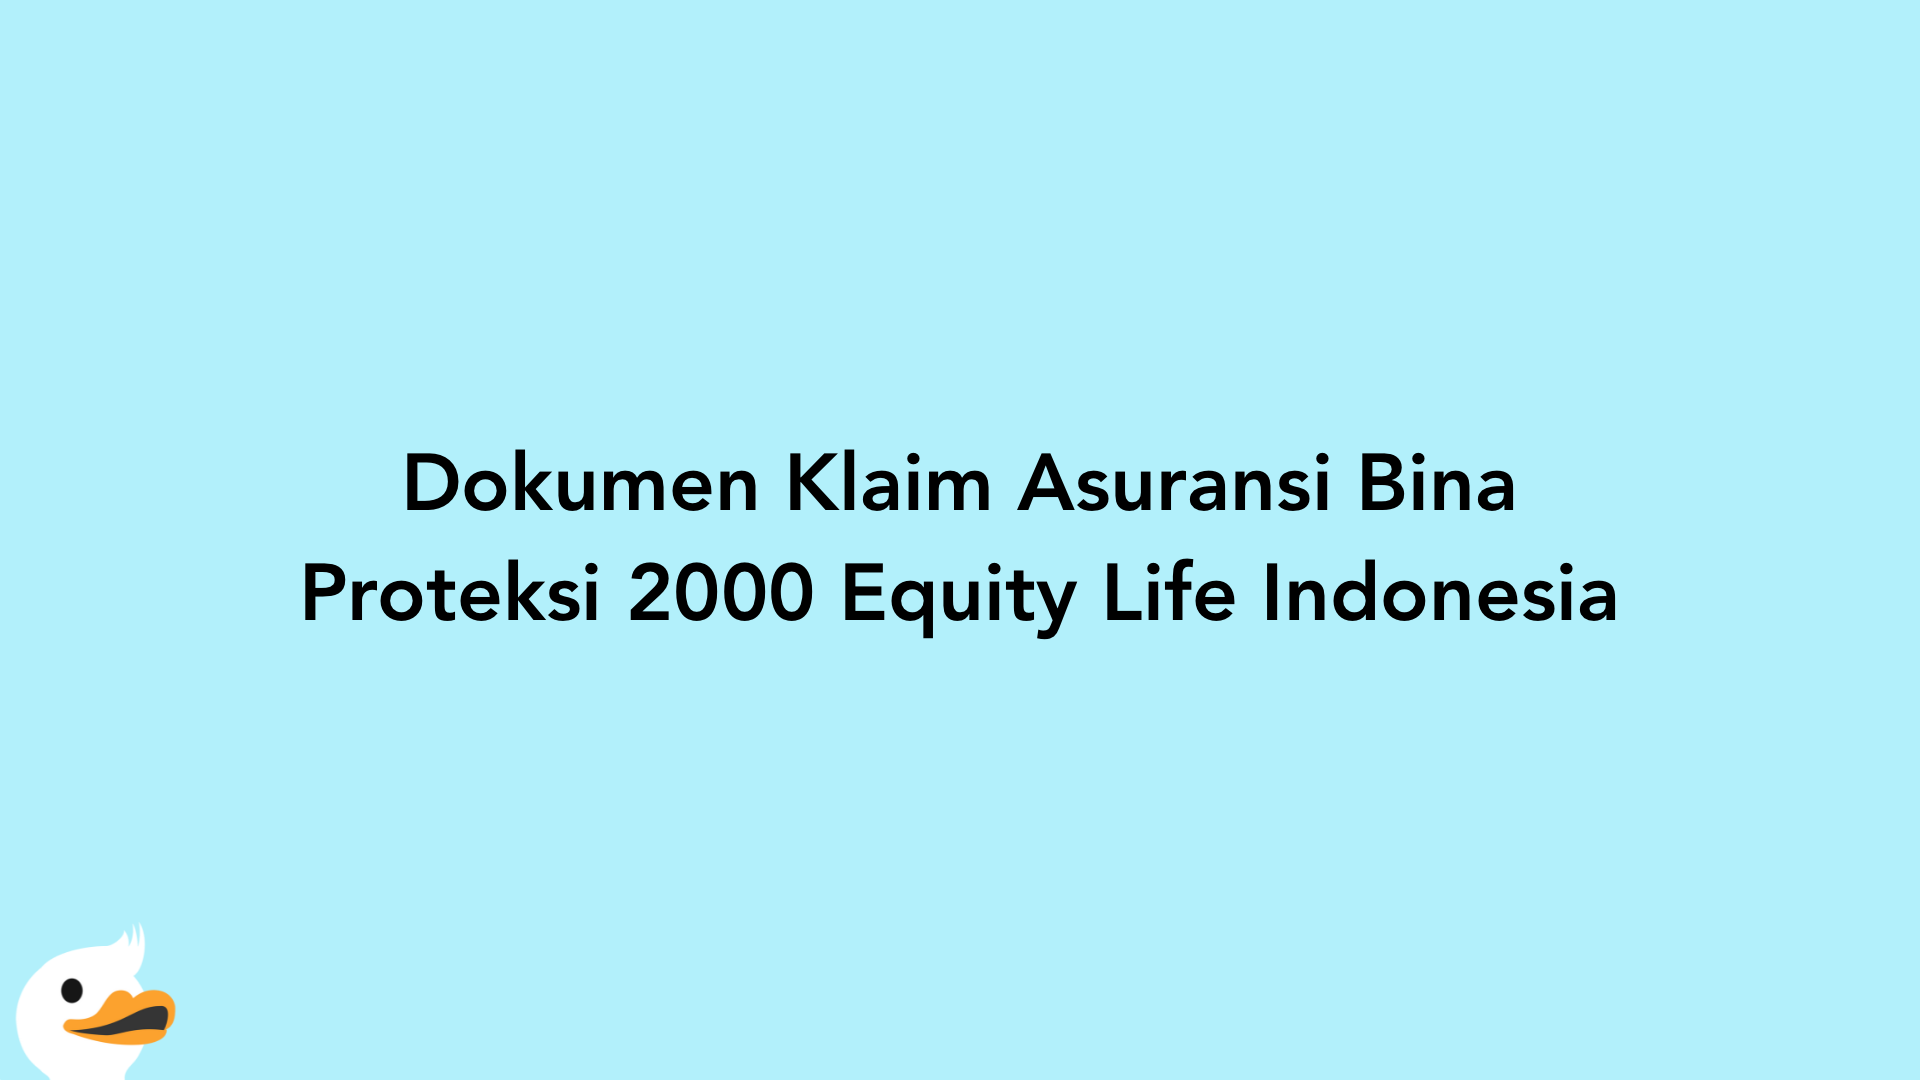 Dokumen Klaim Asuransi Bina Proteksi 2000 Equity Life Indonesia